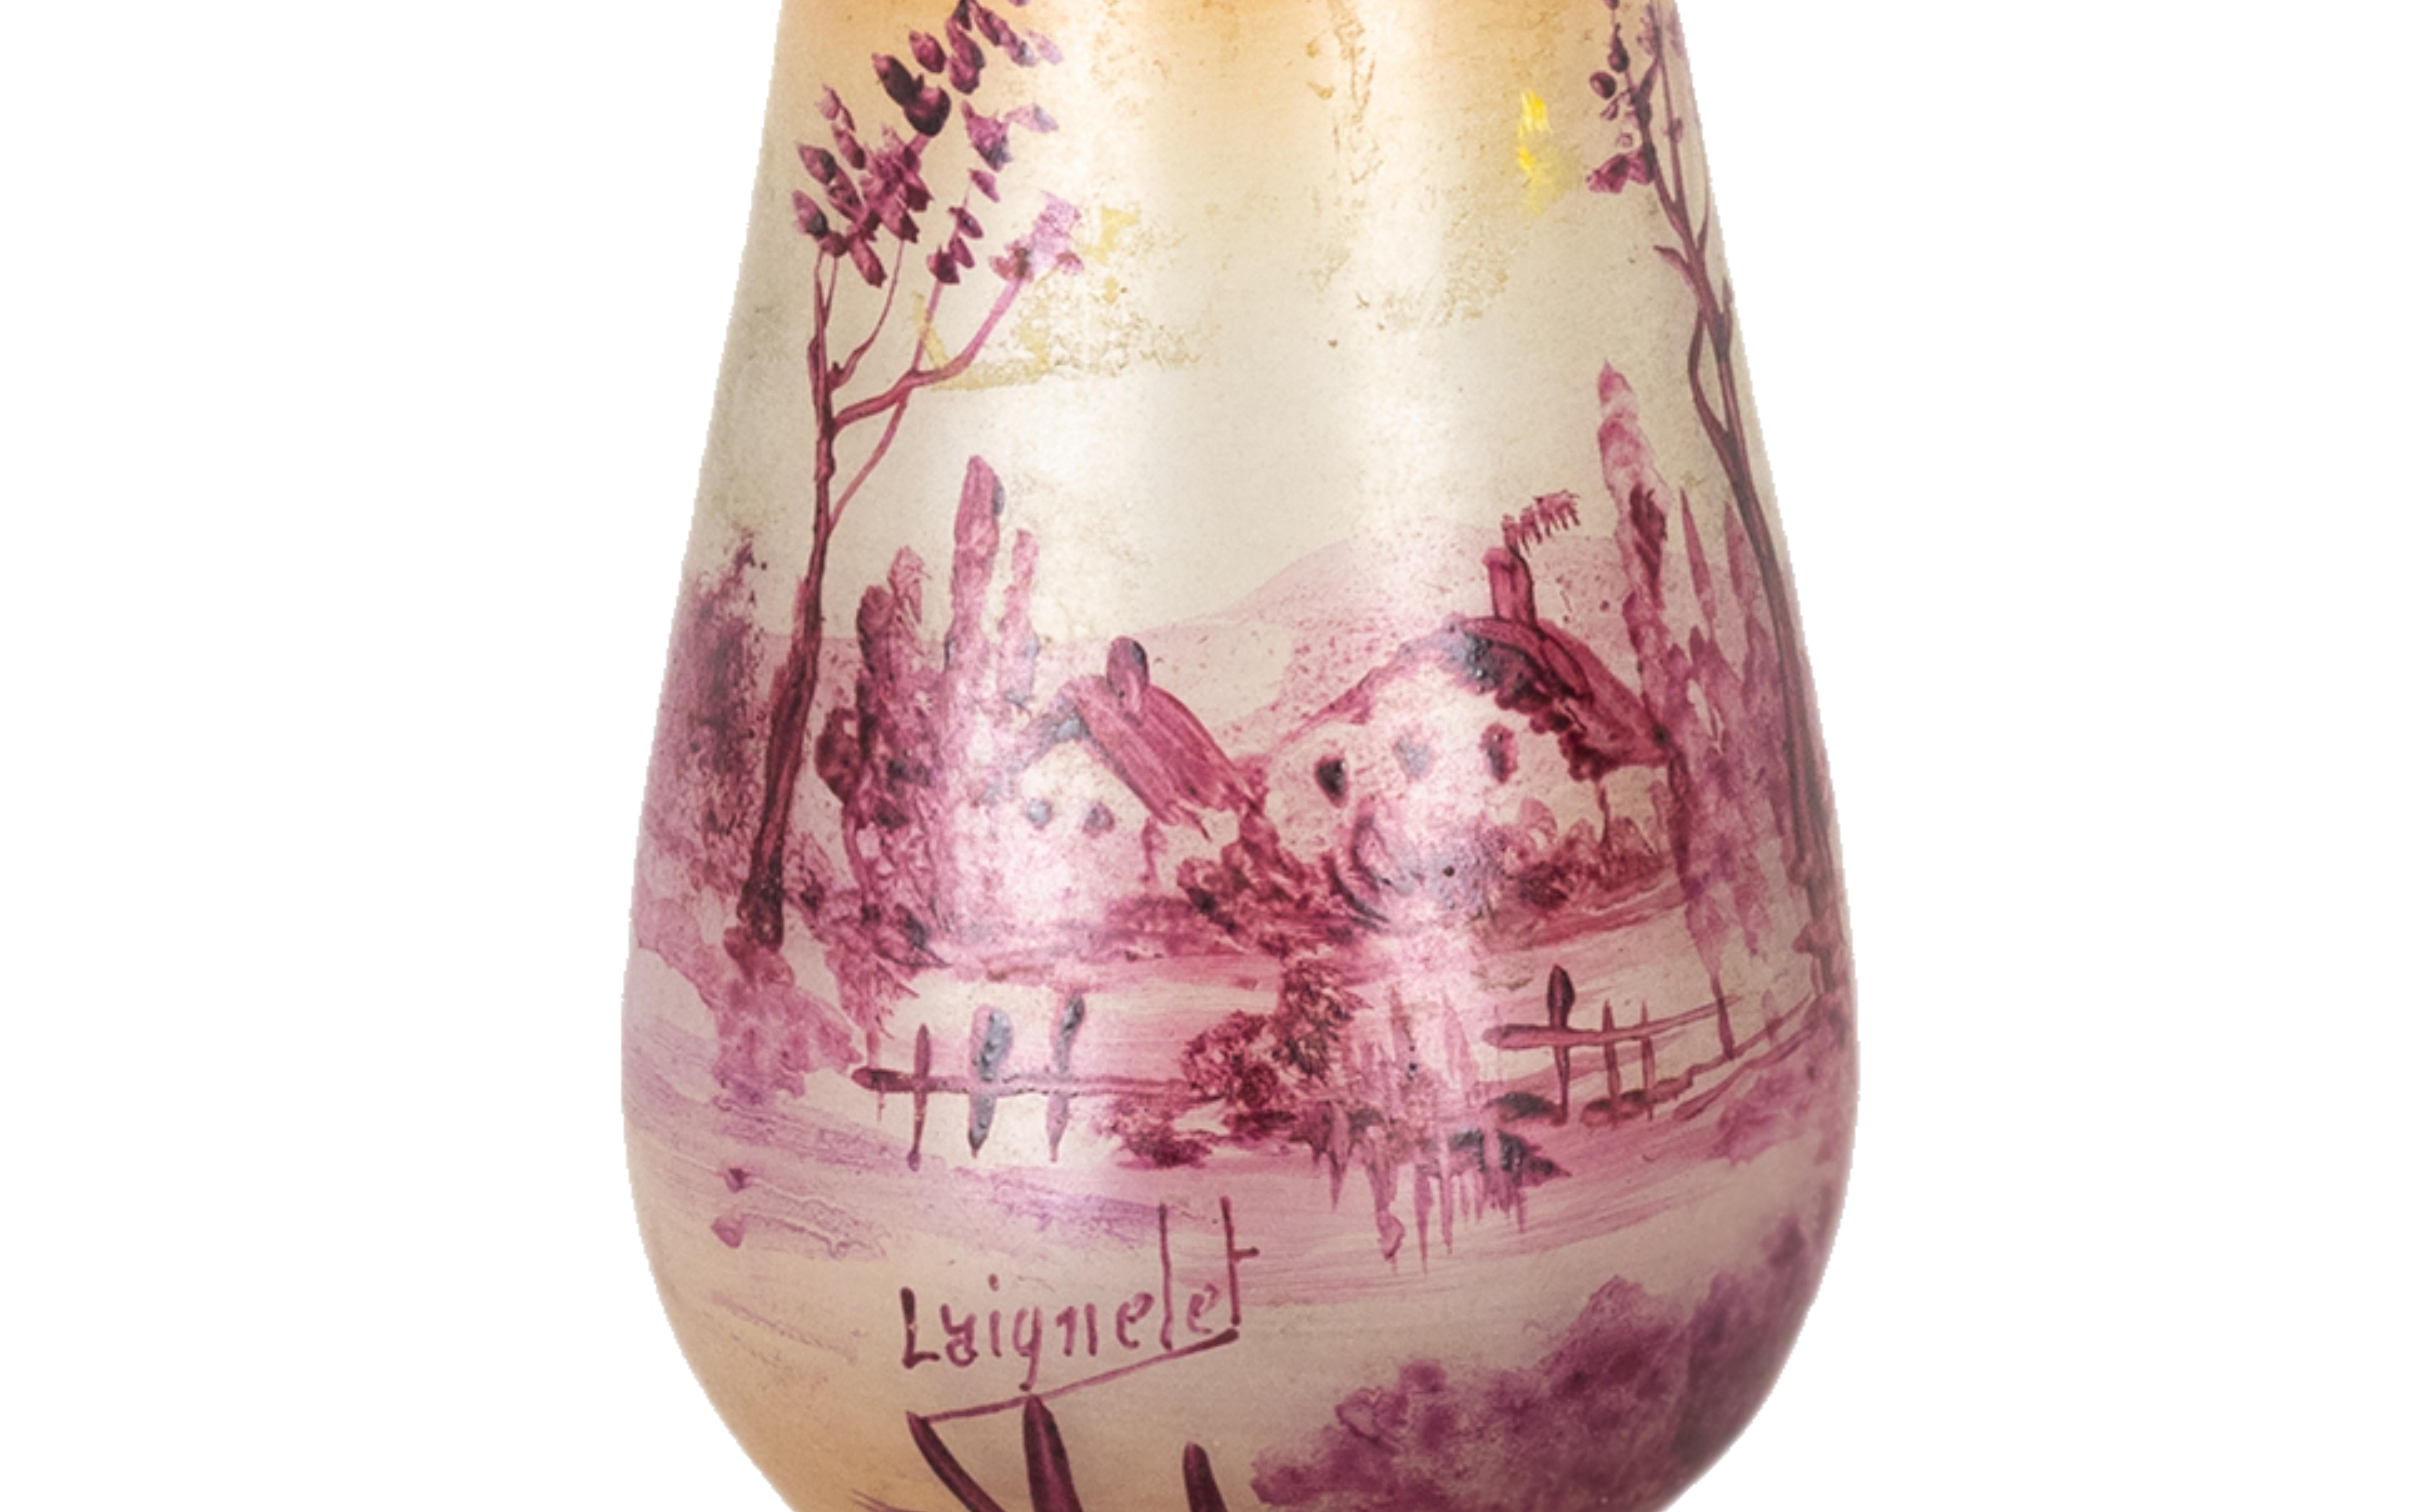 Vase aus der Verrerie de Laignelet, signiert 